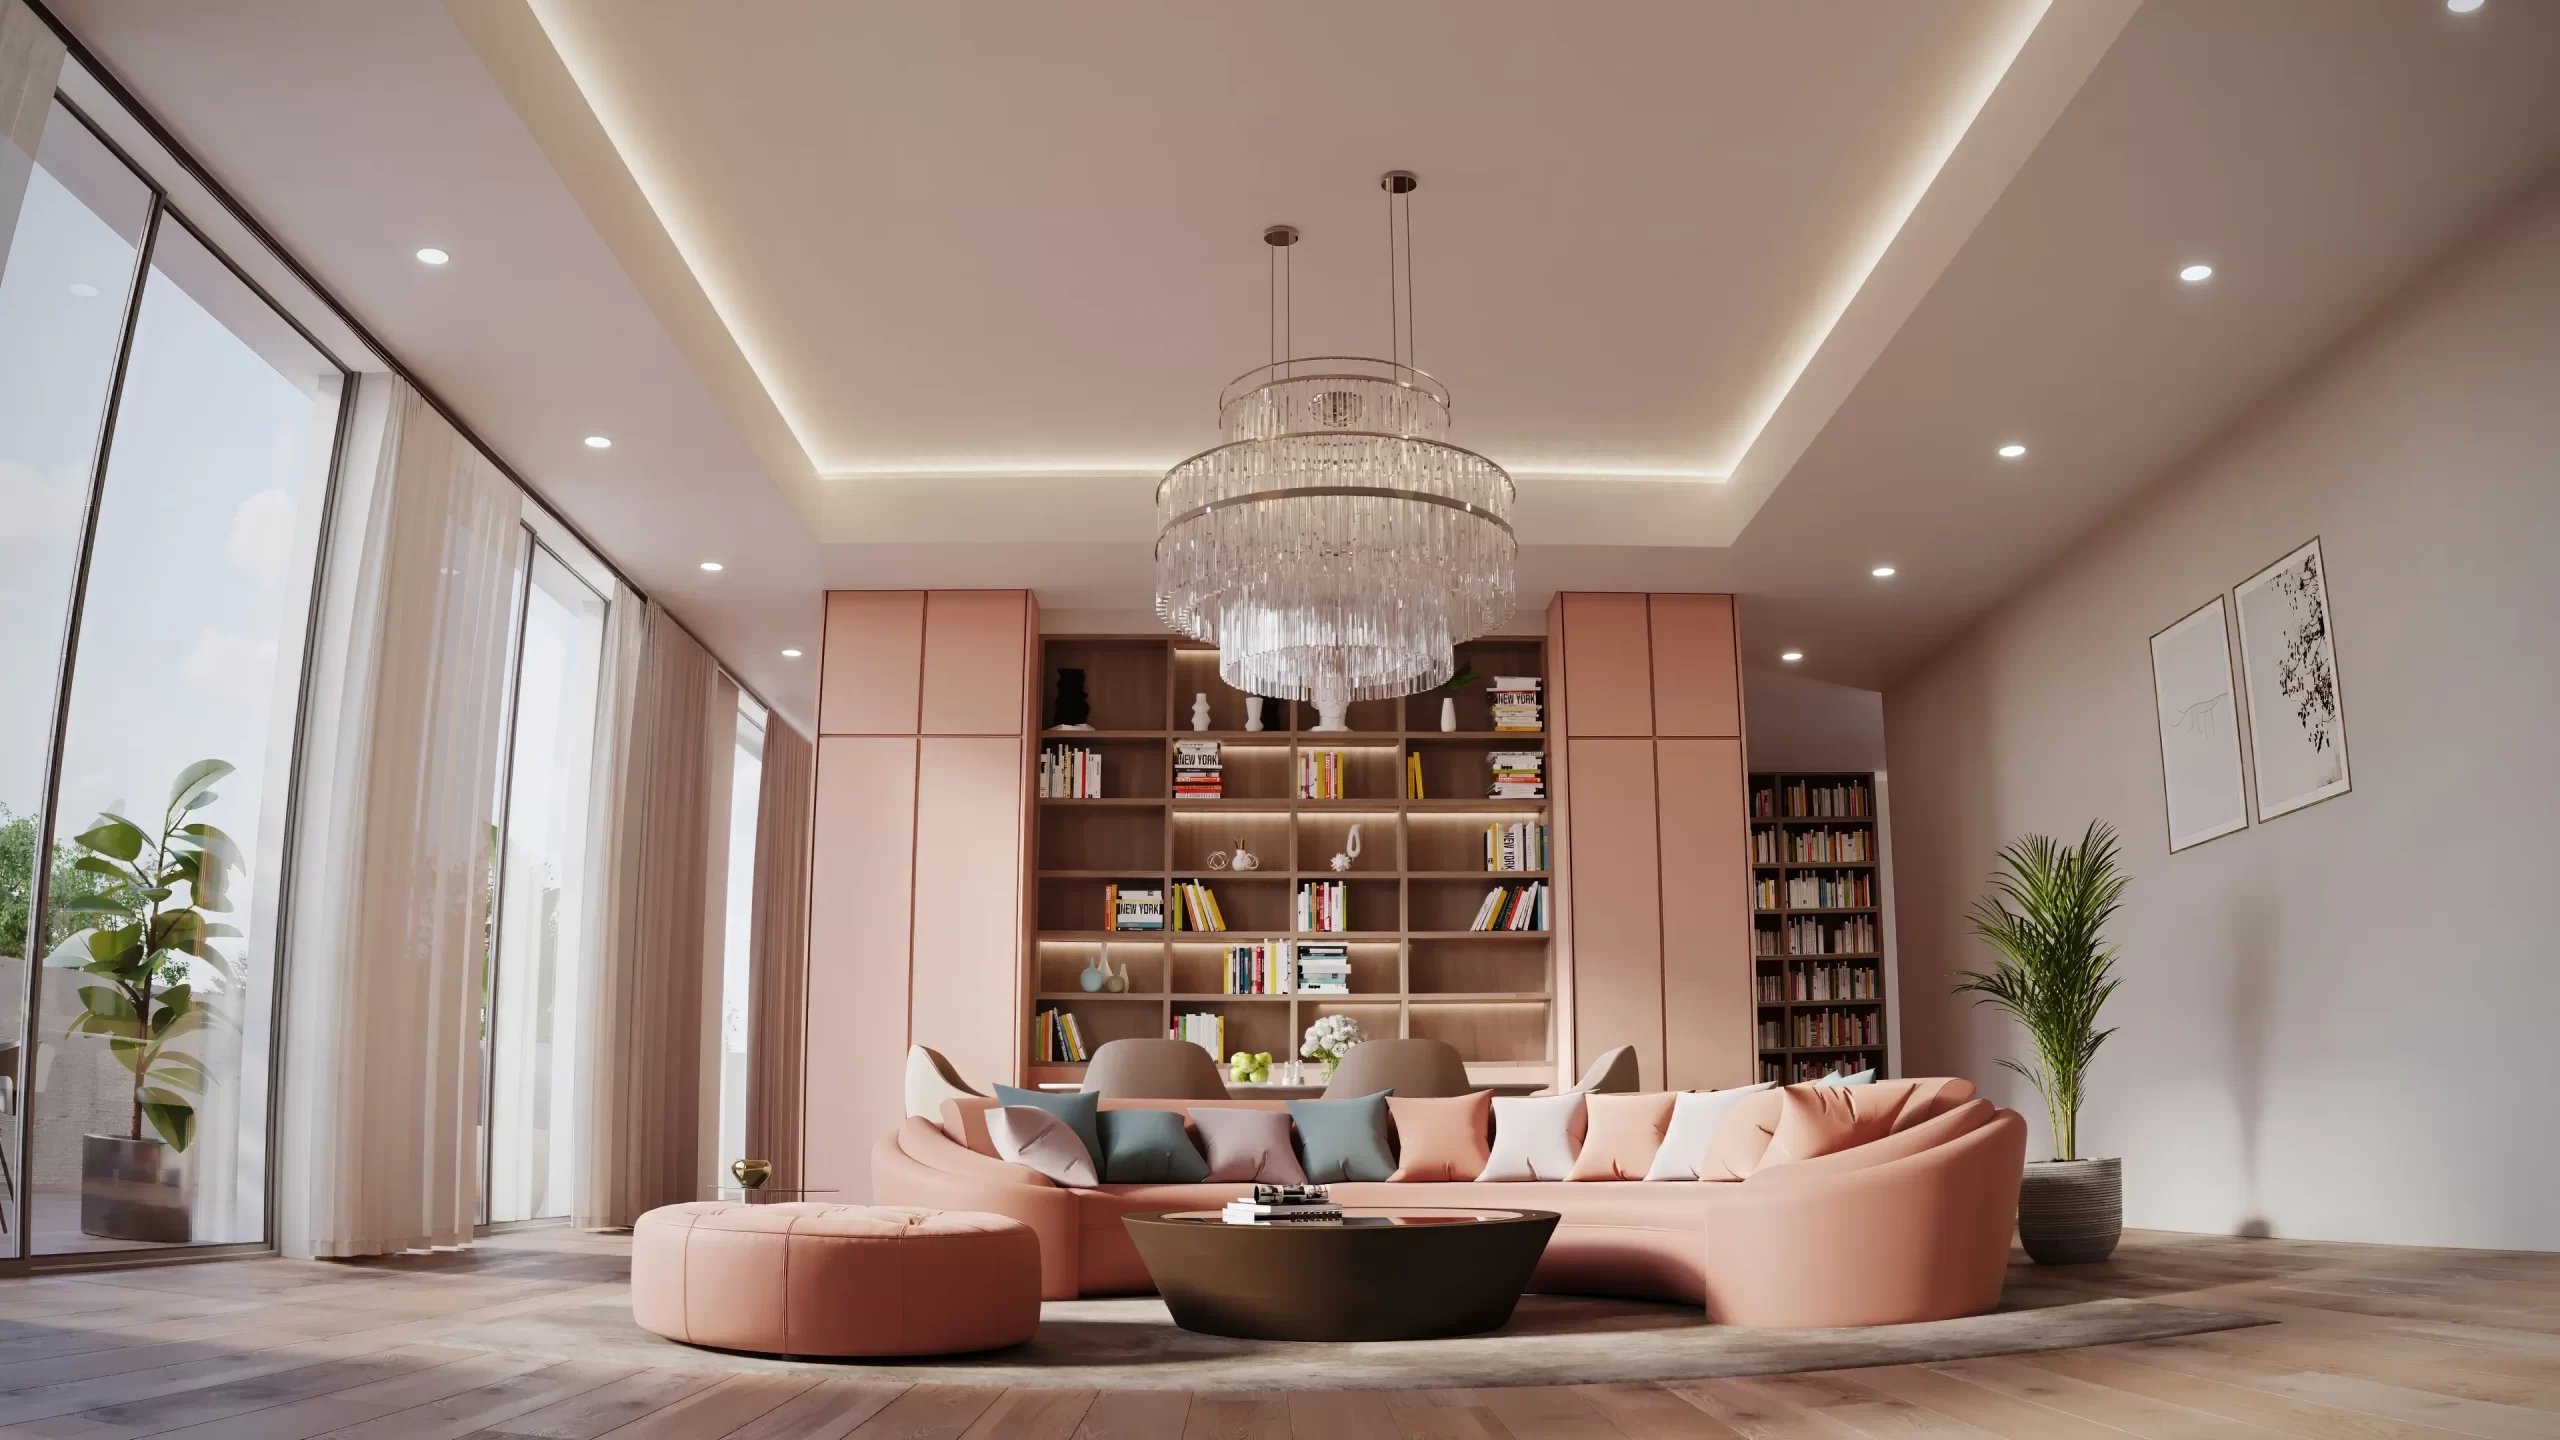 Fisheye 3D visualization of a luxury living room by CG Viz Studio